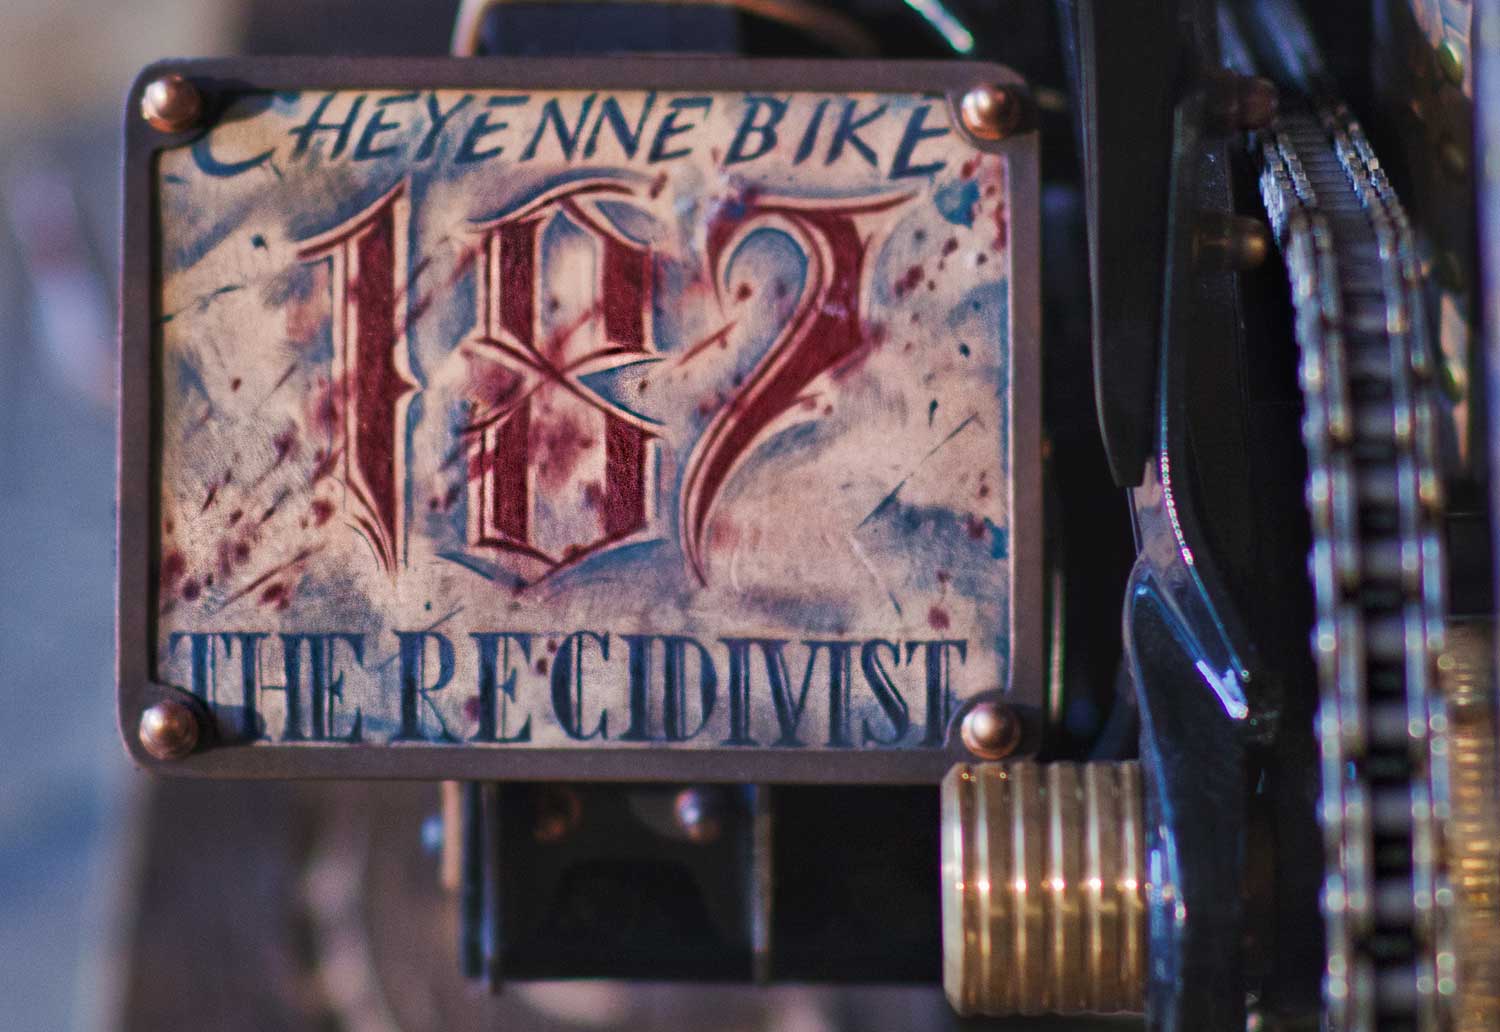 Cheyenne-Bike---The-Recidivist-(24)